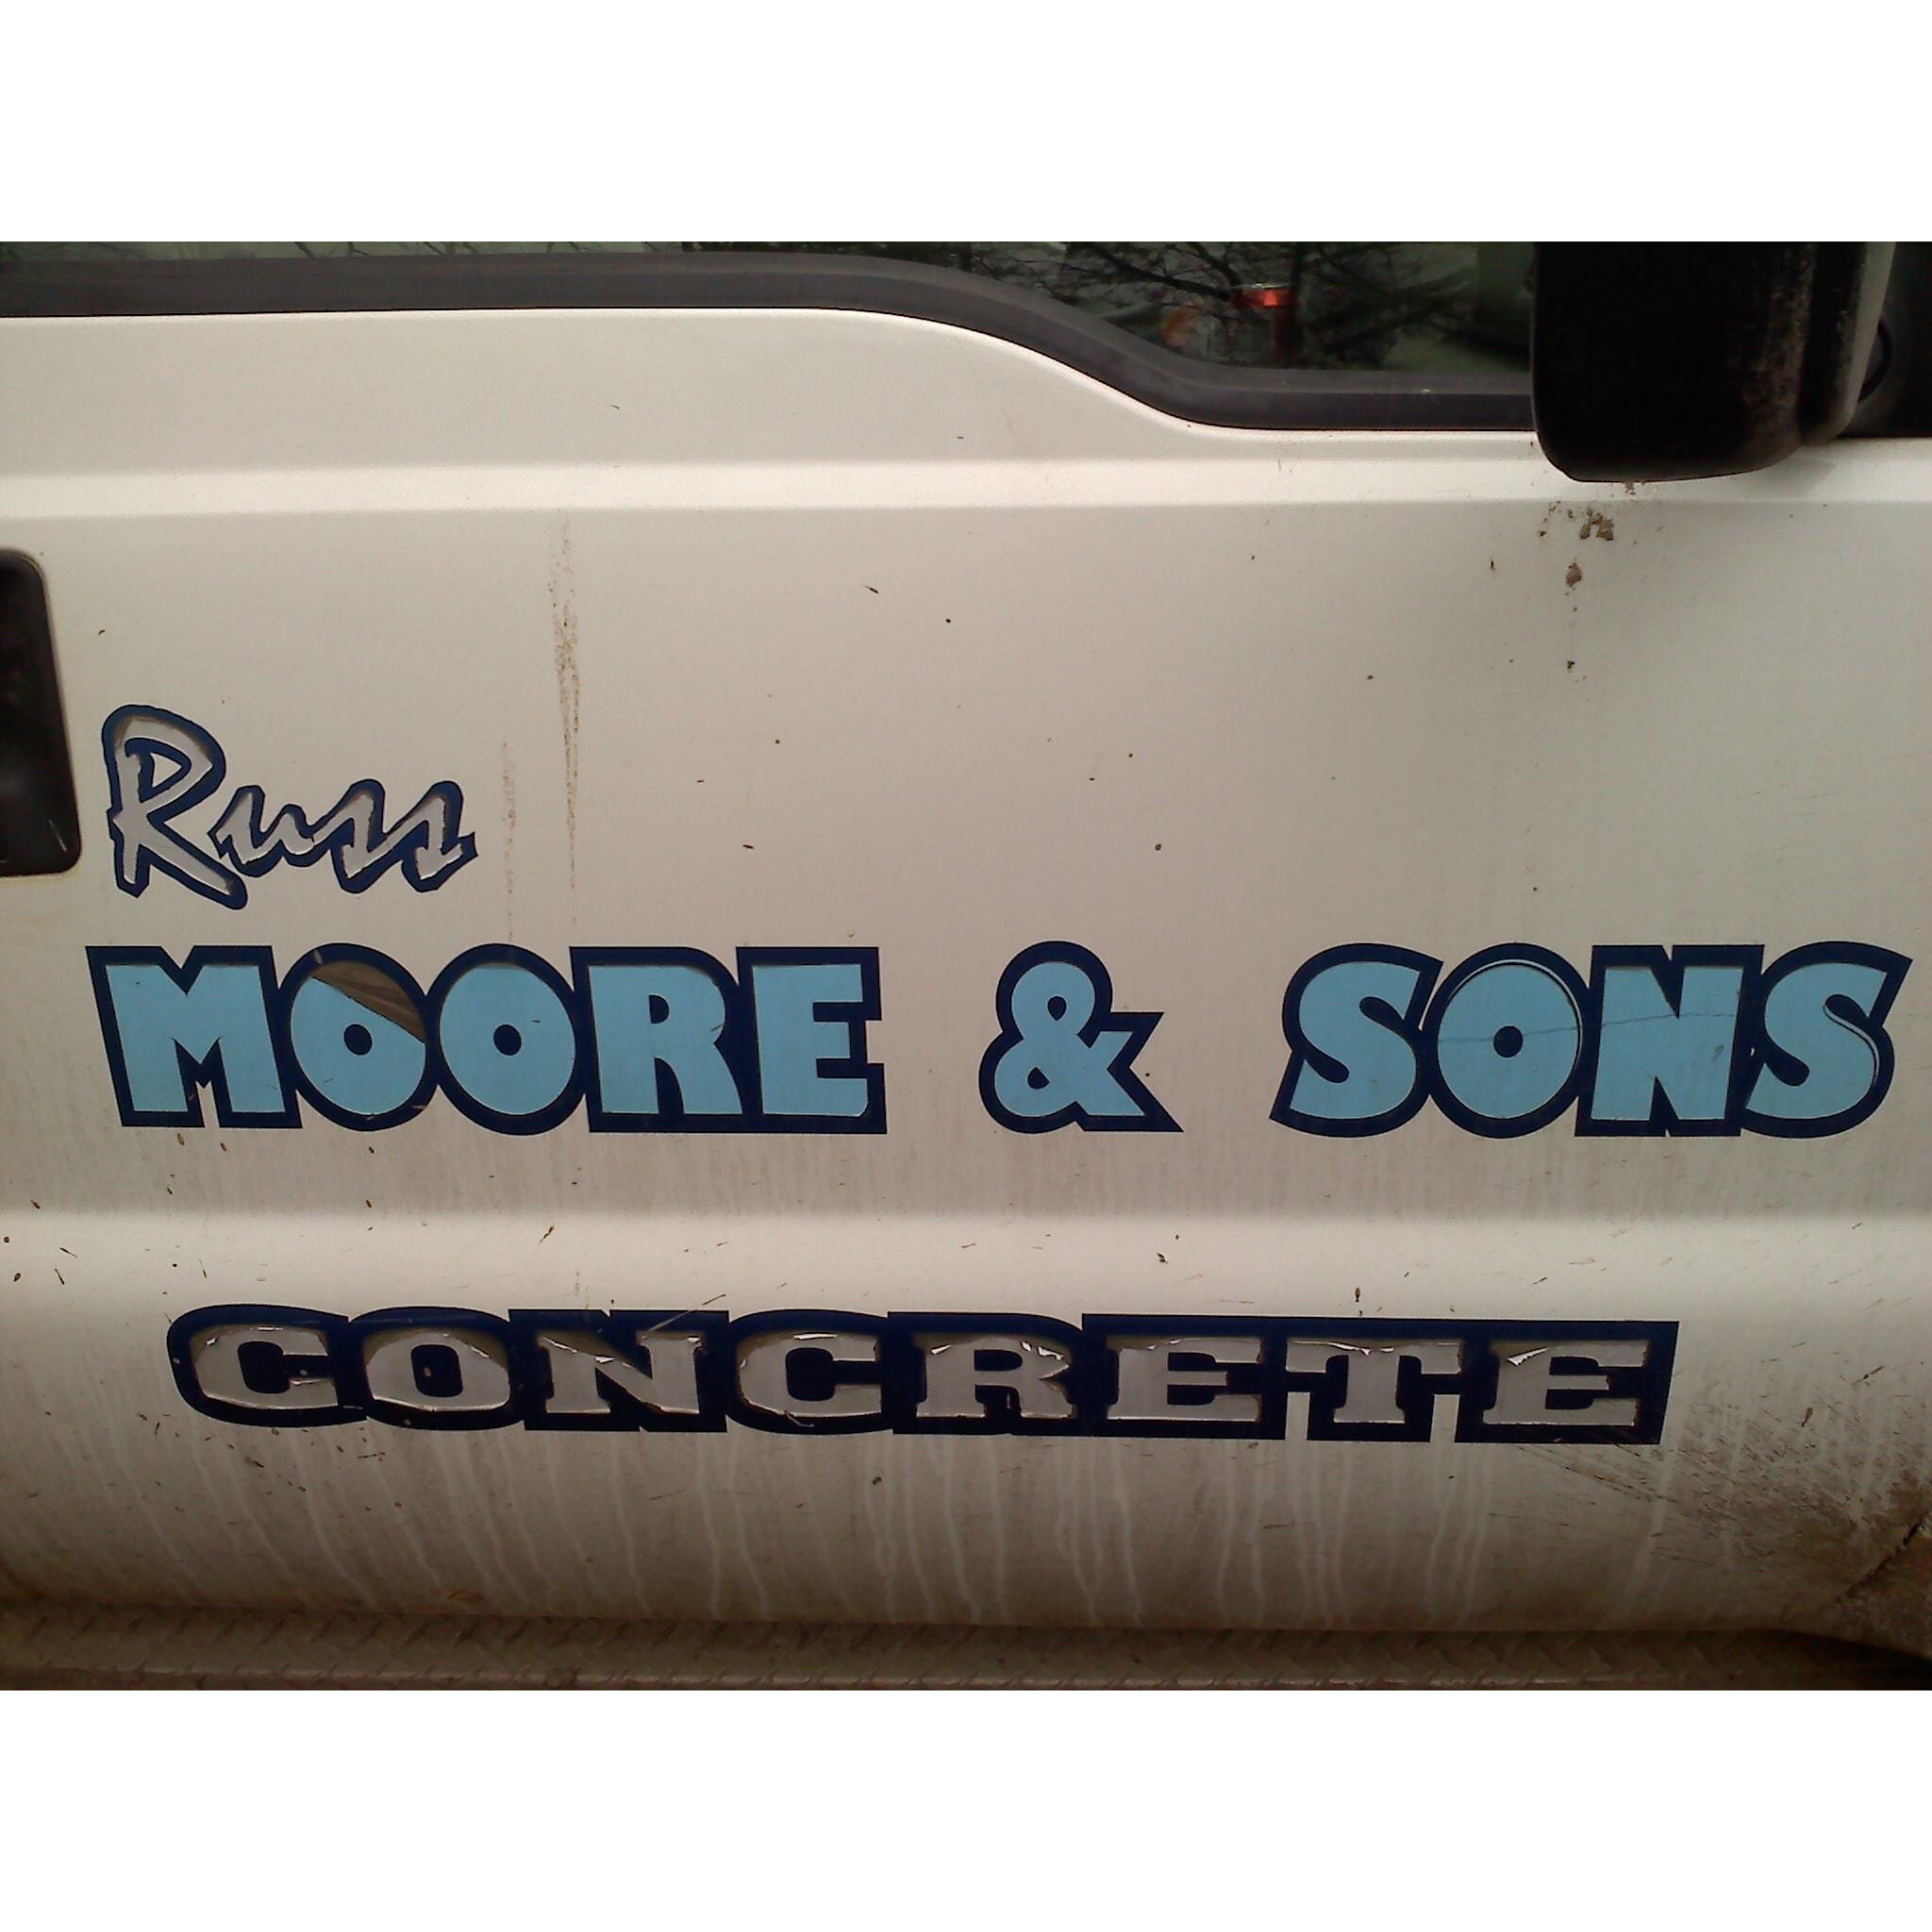 Russ Moore & Sons Concrete